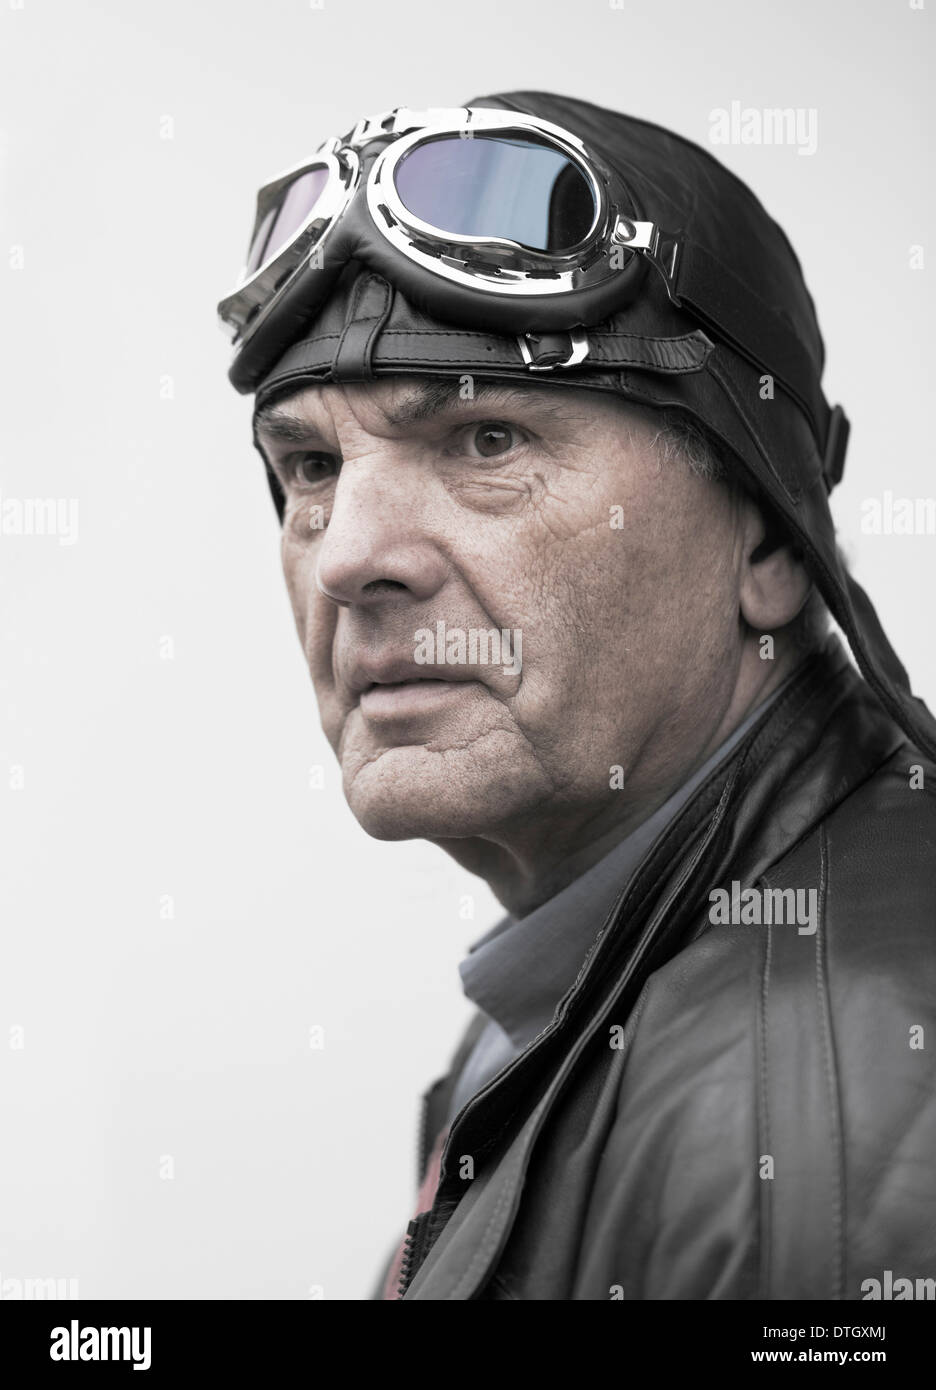 Man with aviator cap Stock Photo